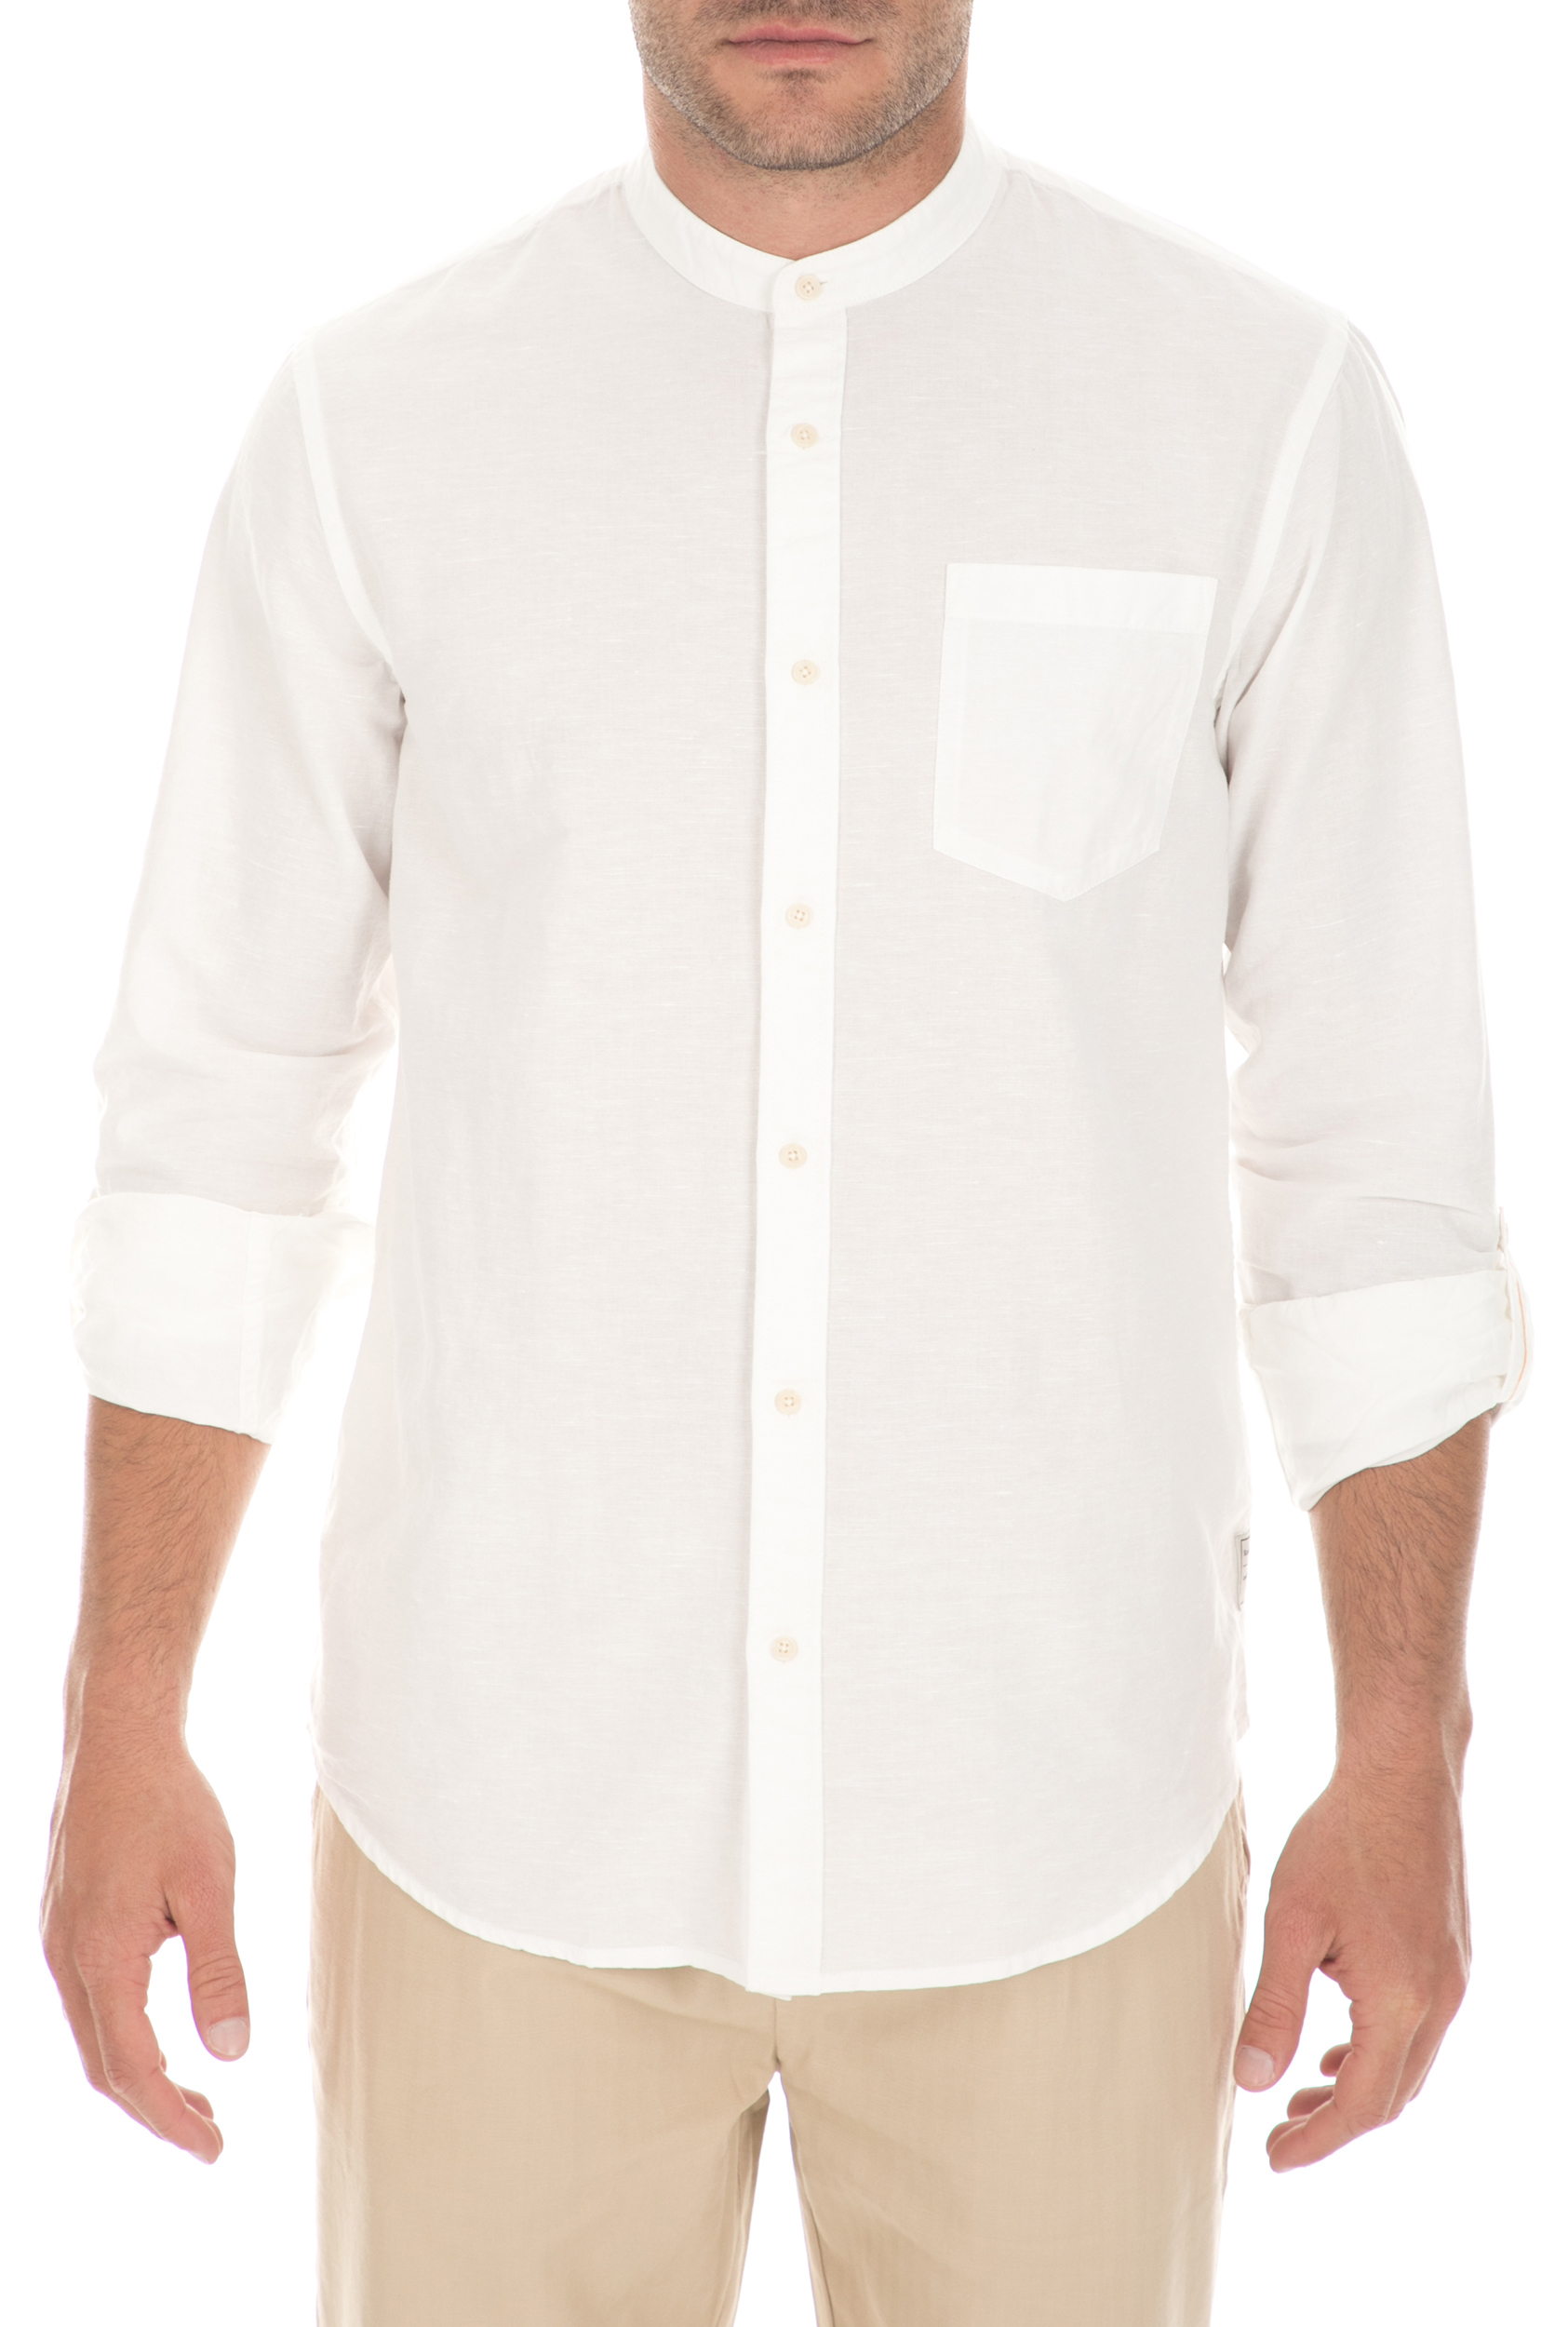 SCOTCH & SODA - Ανδρικό μακρυμάνικο πουκάμισο SCOTCH & SODA λευκό Ανδρικά/Ρούχα/Πουκάμισα/Μακρυμάνικα